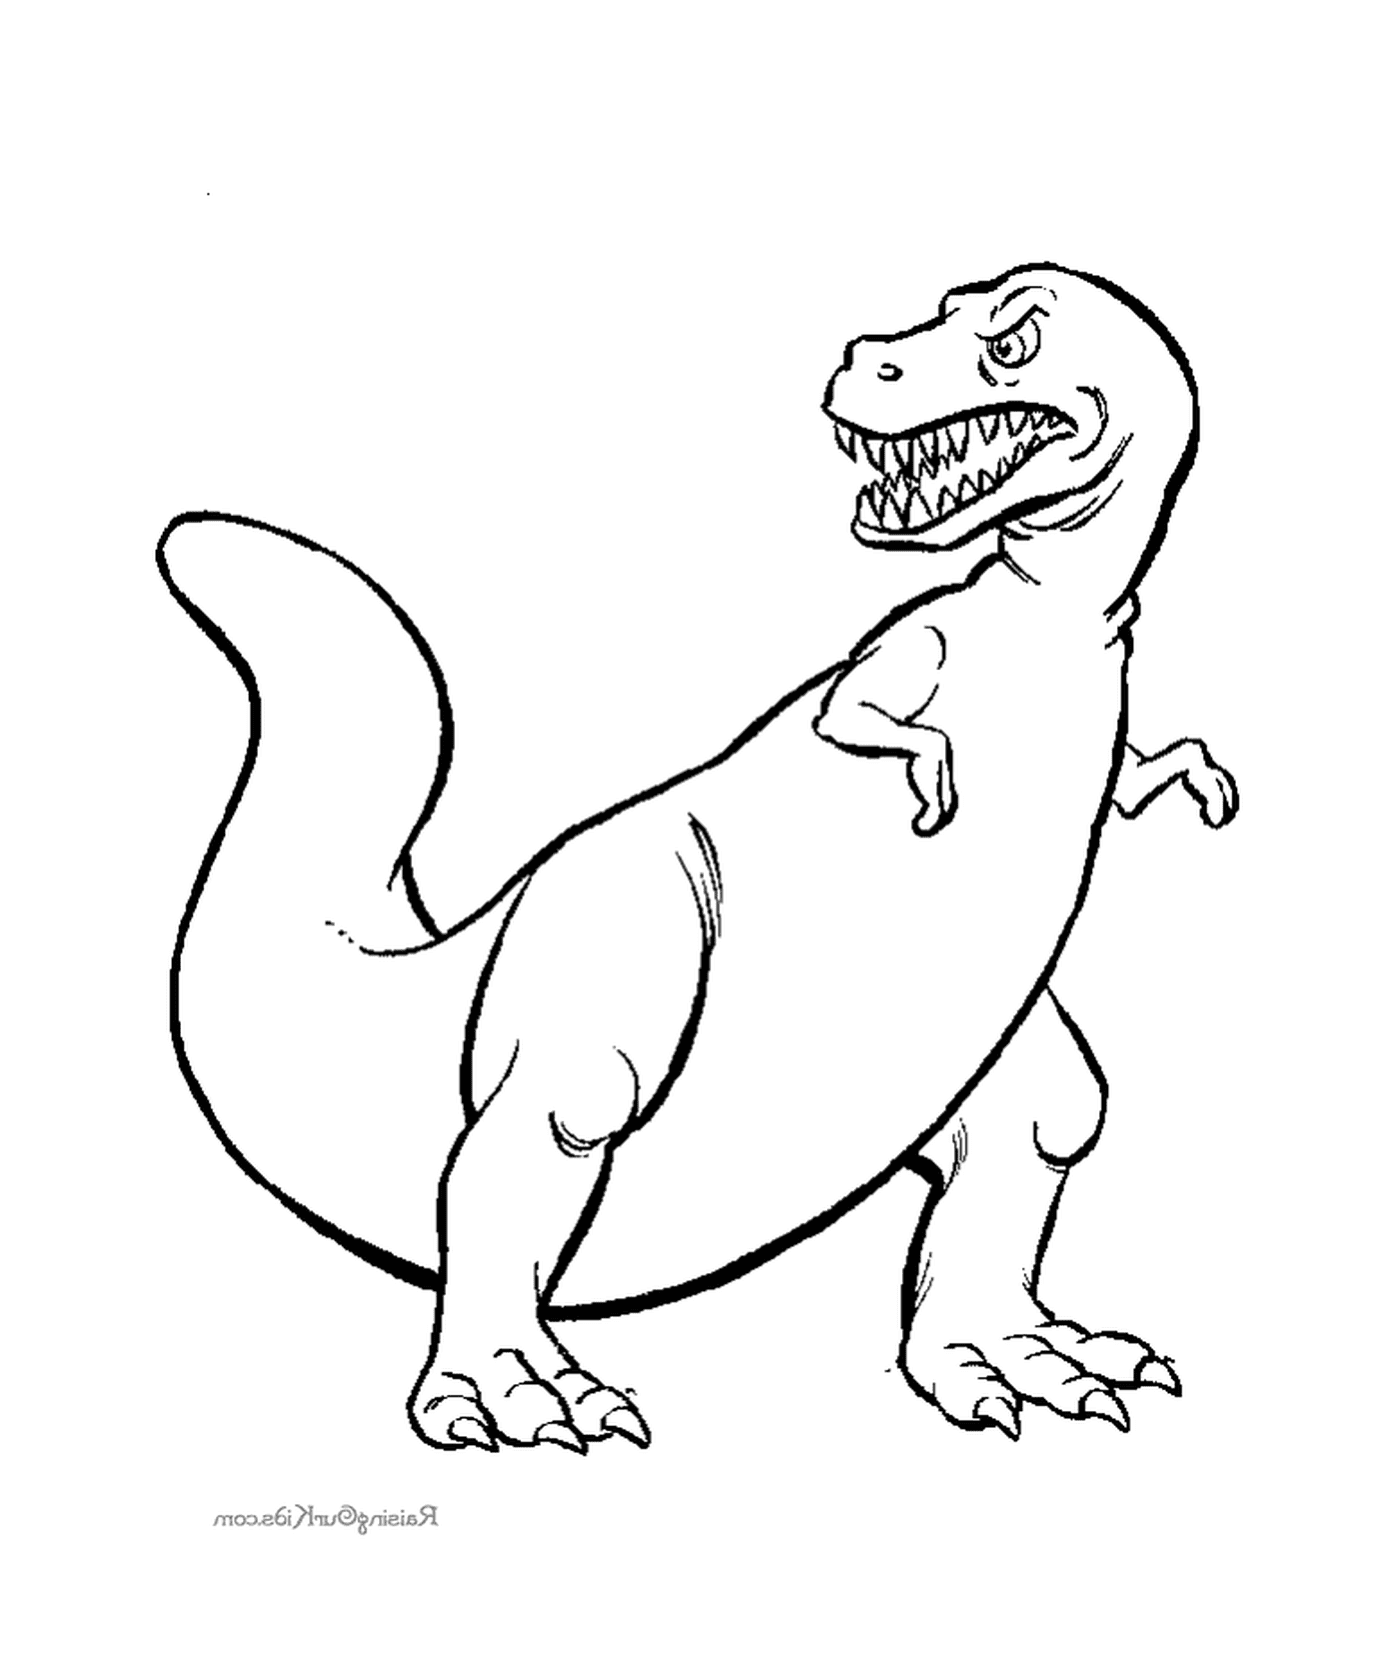   Un dinosaure dessiné 